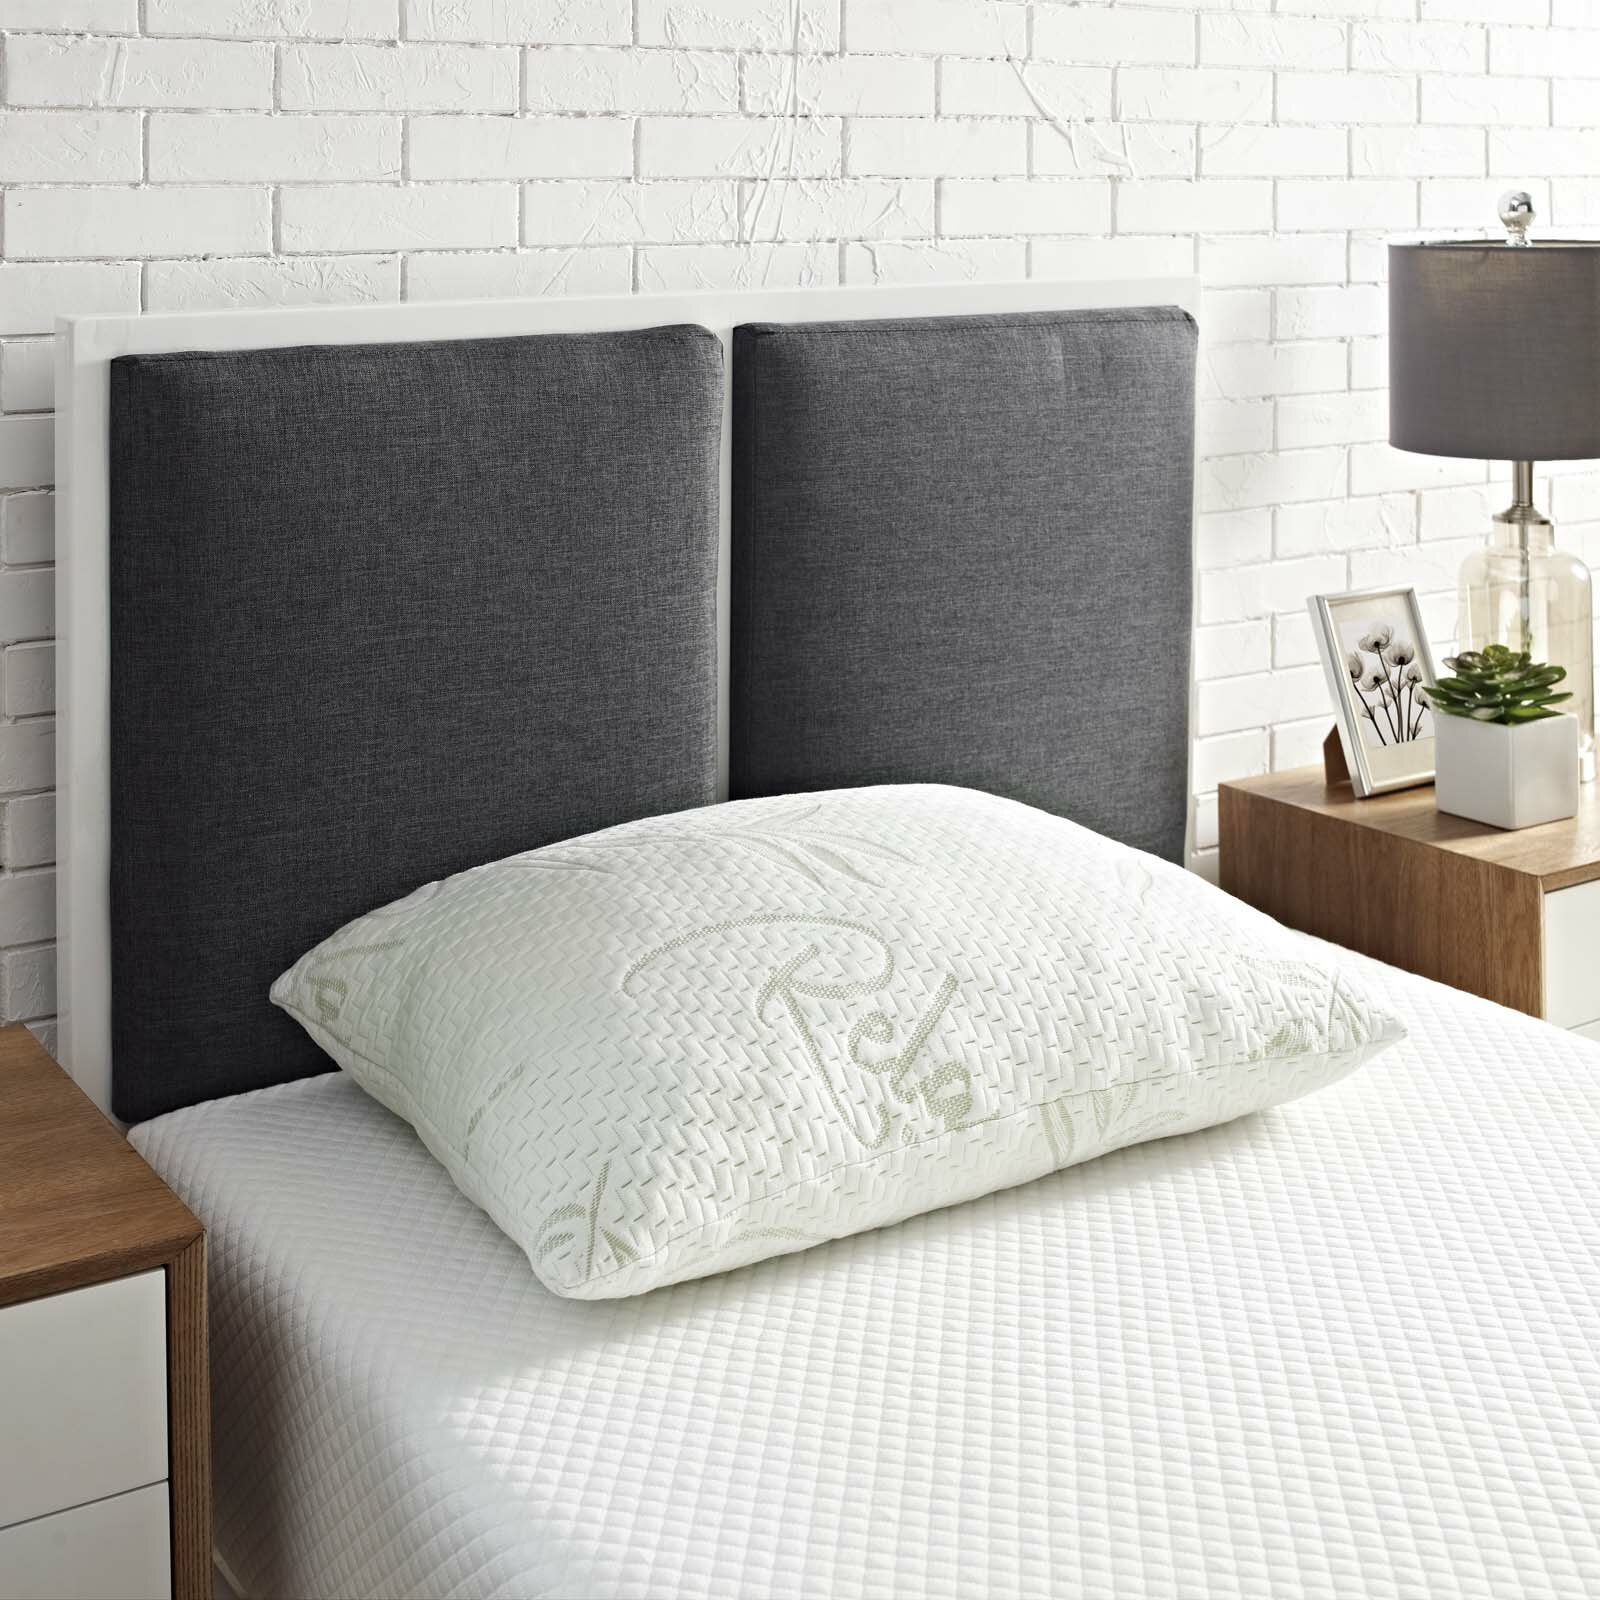 Alwyn Home Kinsella Memory Foam Pillow Reviews Wayfair